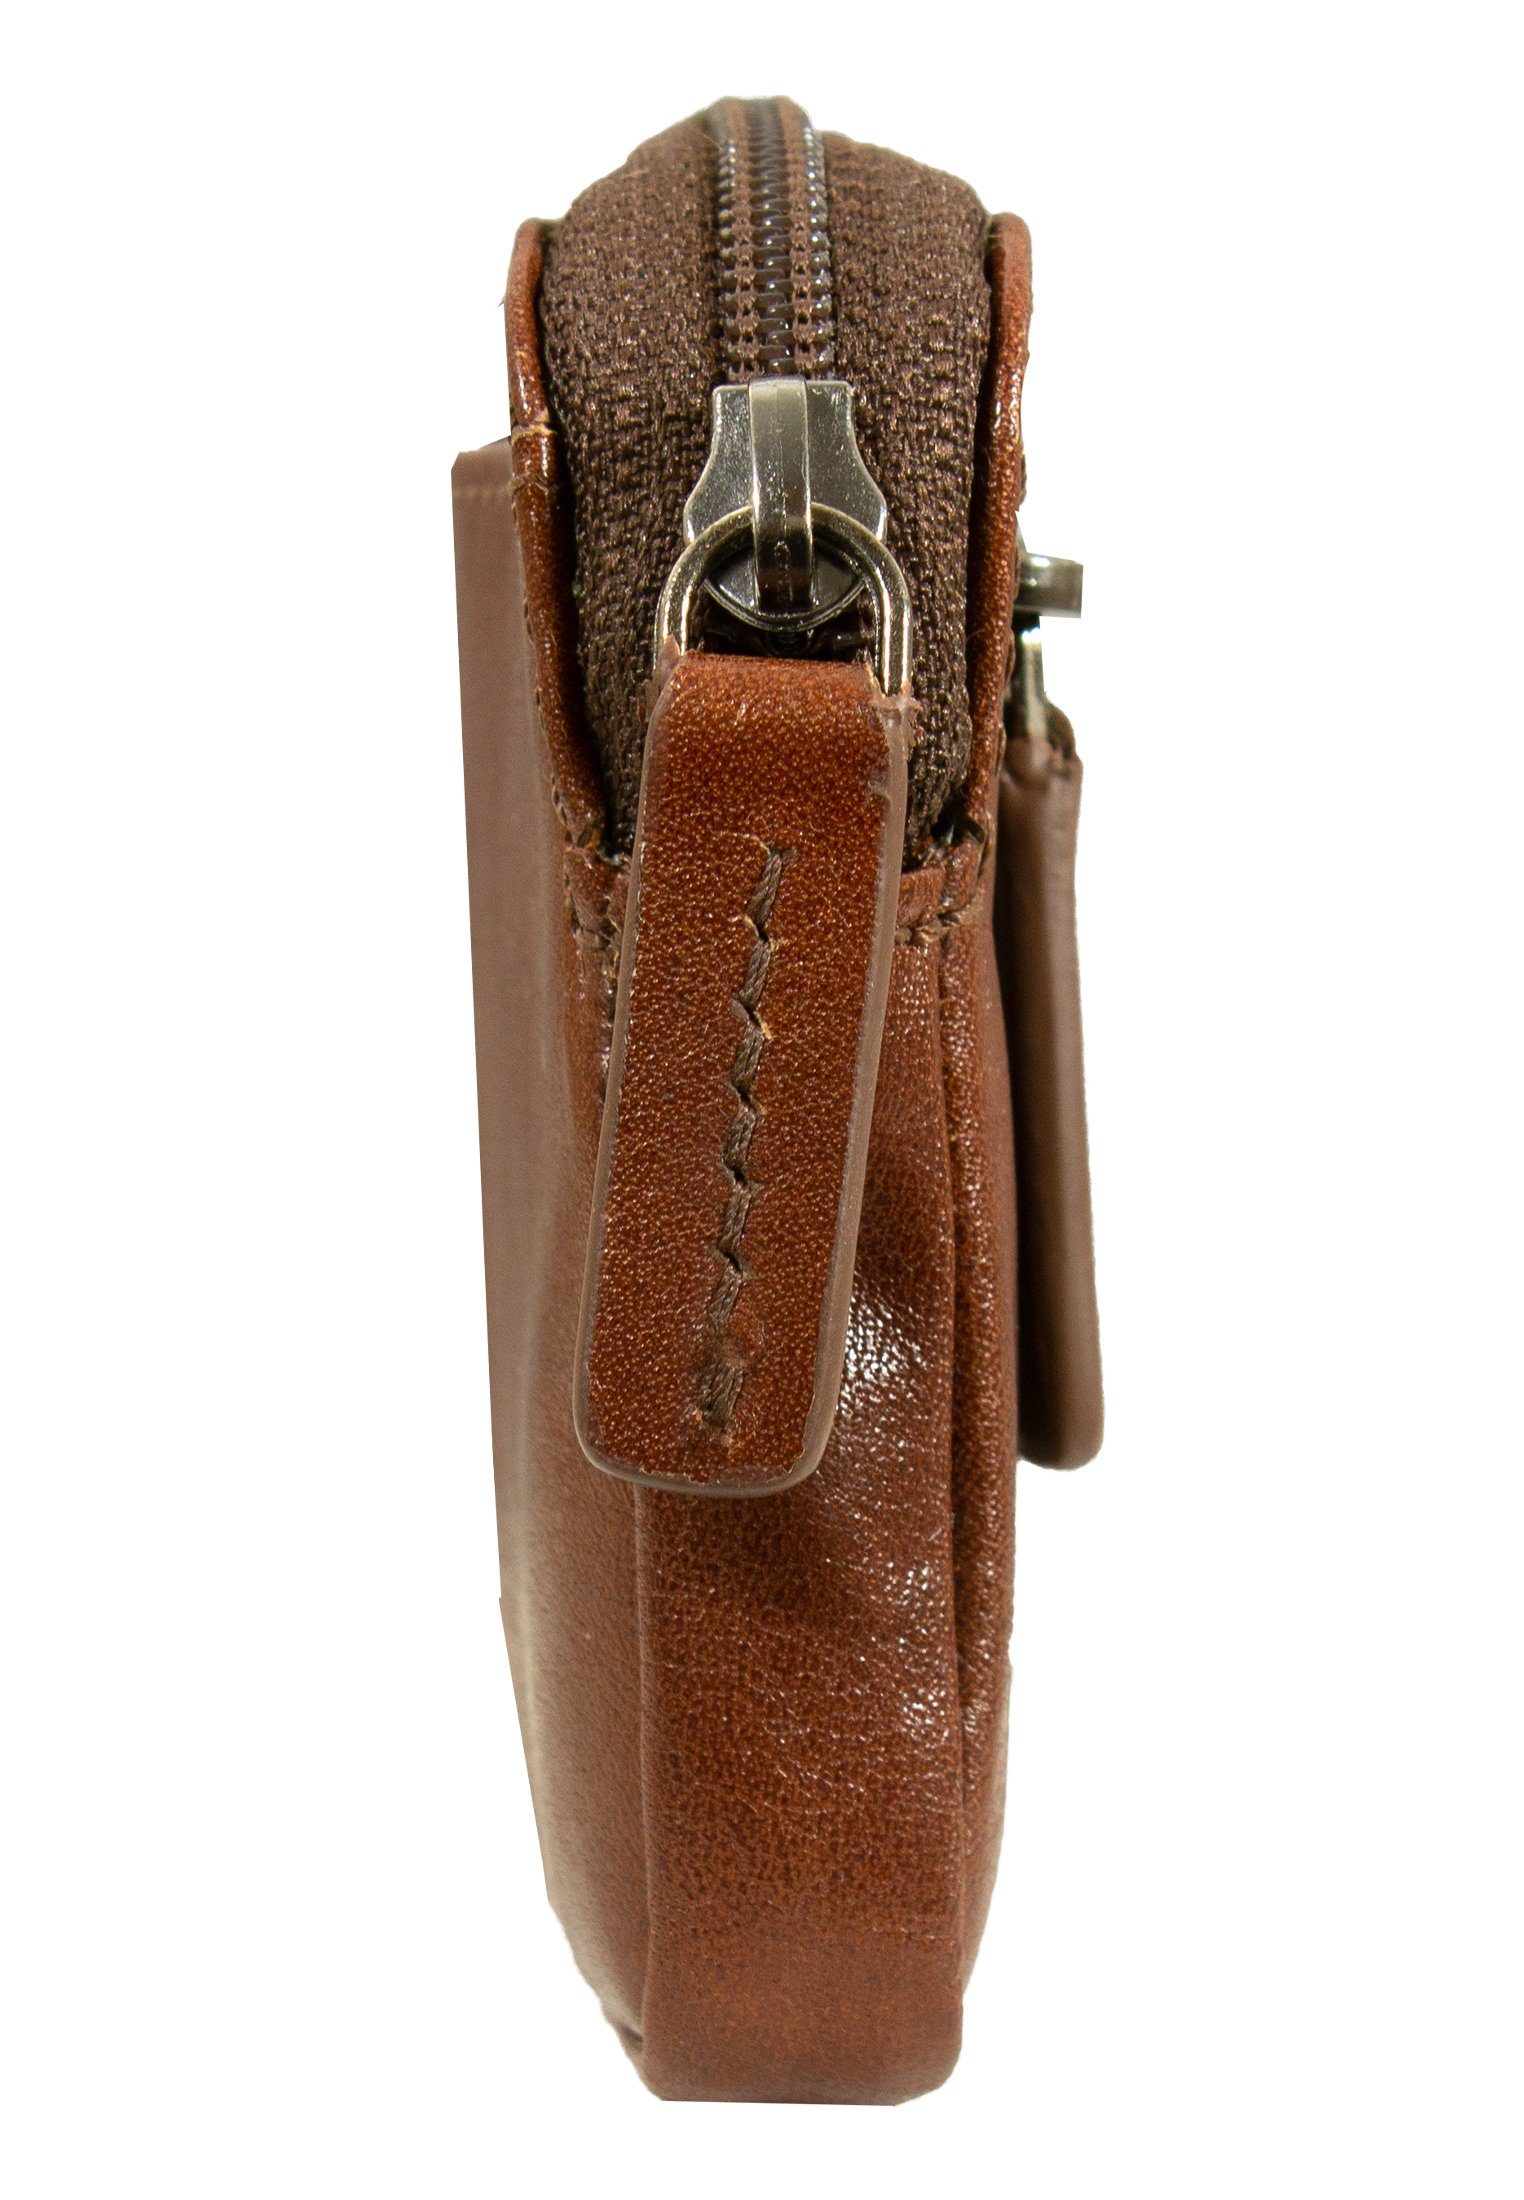 Büffel palisandro COUNTRY Zipper, Rindleder hochwertigem Schlüsseltasche Schlüsseletui Braun M aus